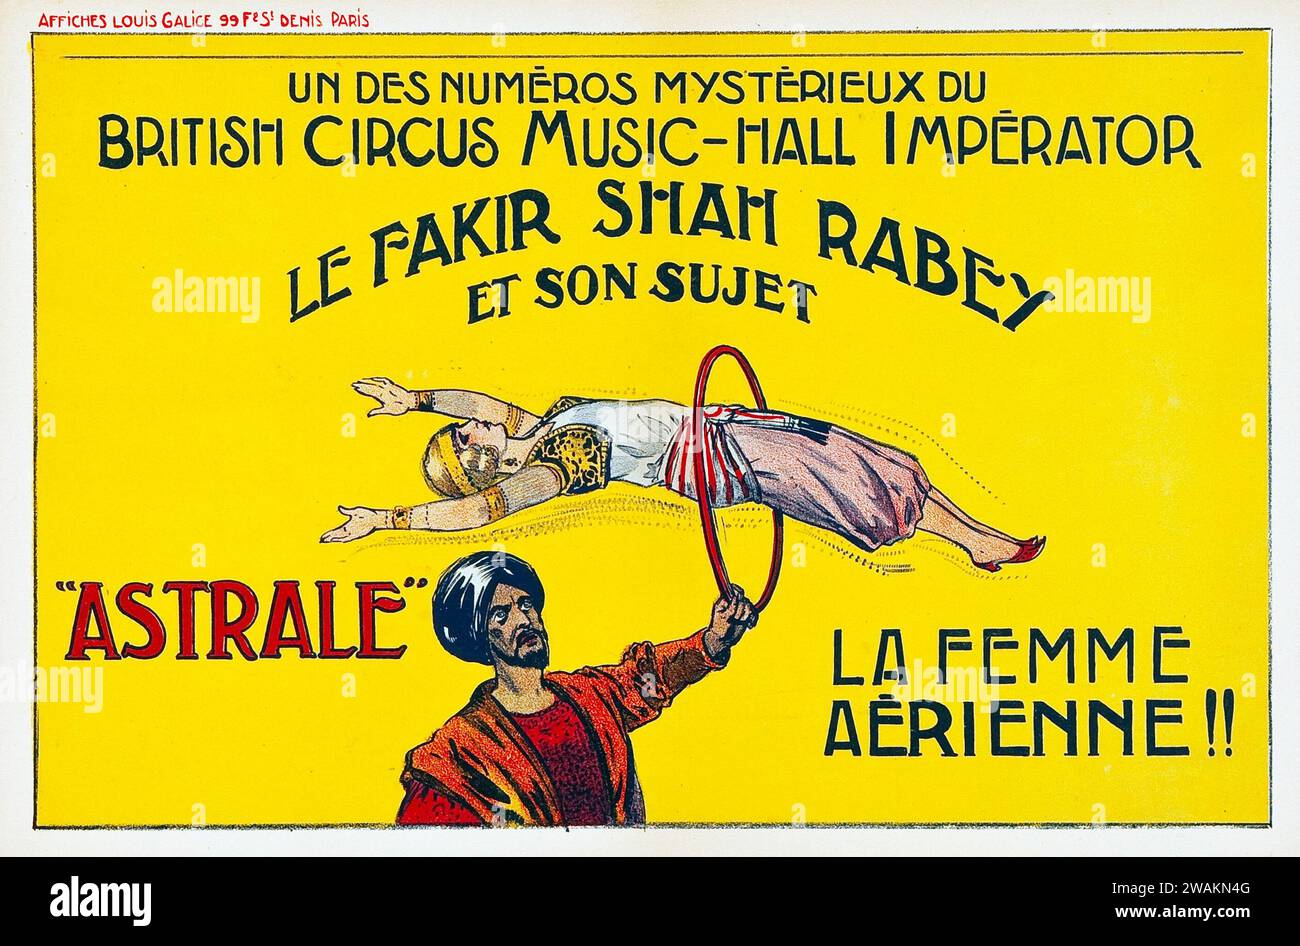 Fakir Shah Rabey Vintage French Poster (c. 1900) Mysteri - Magic Show Stock Photo